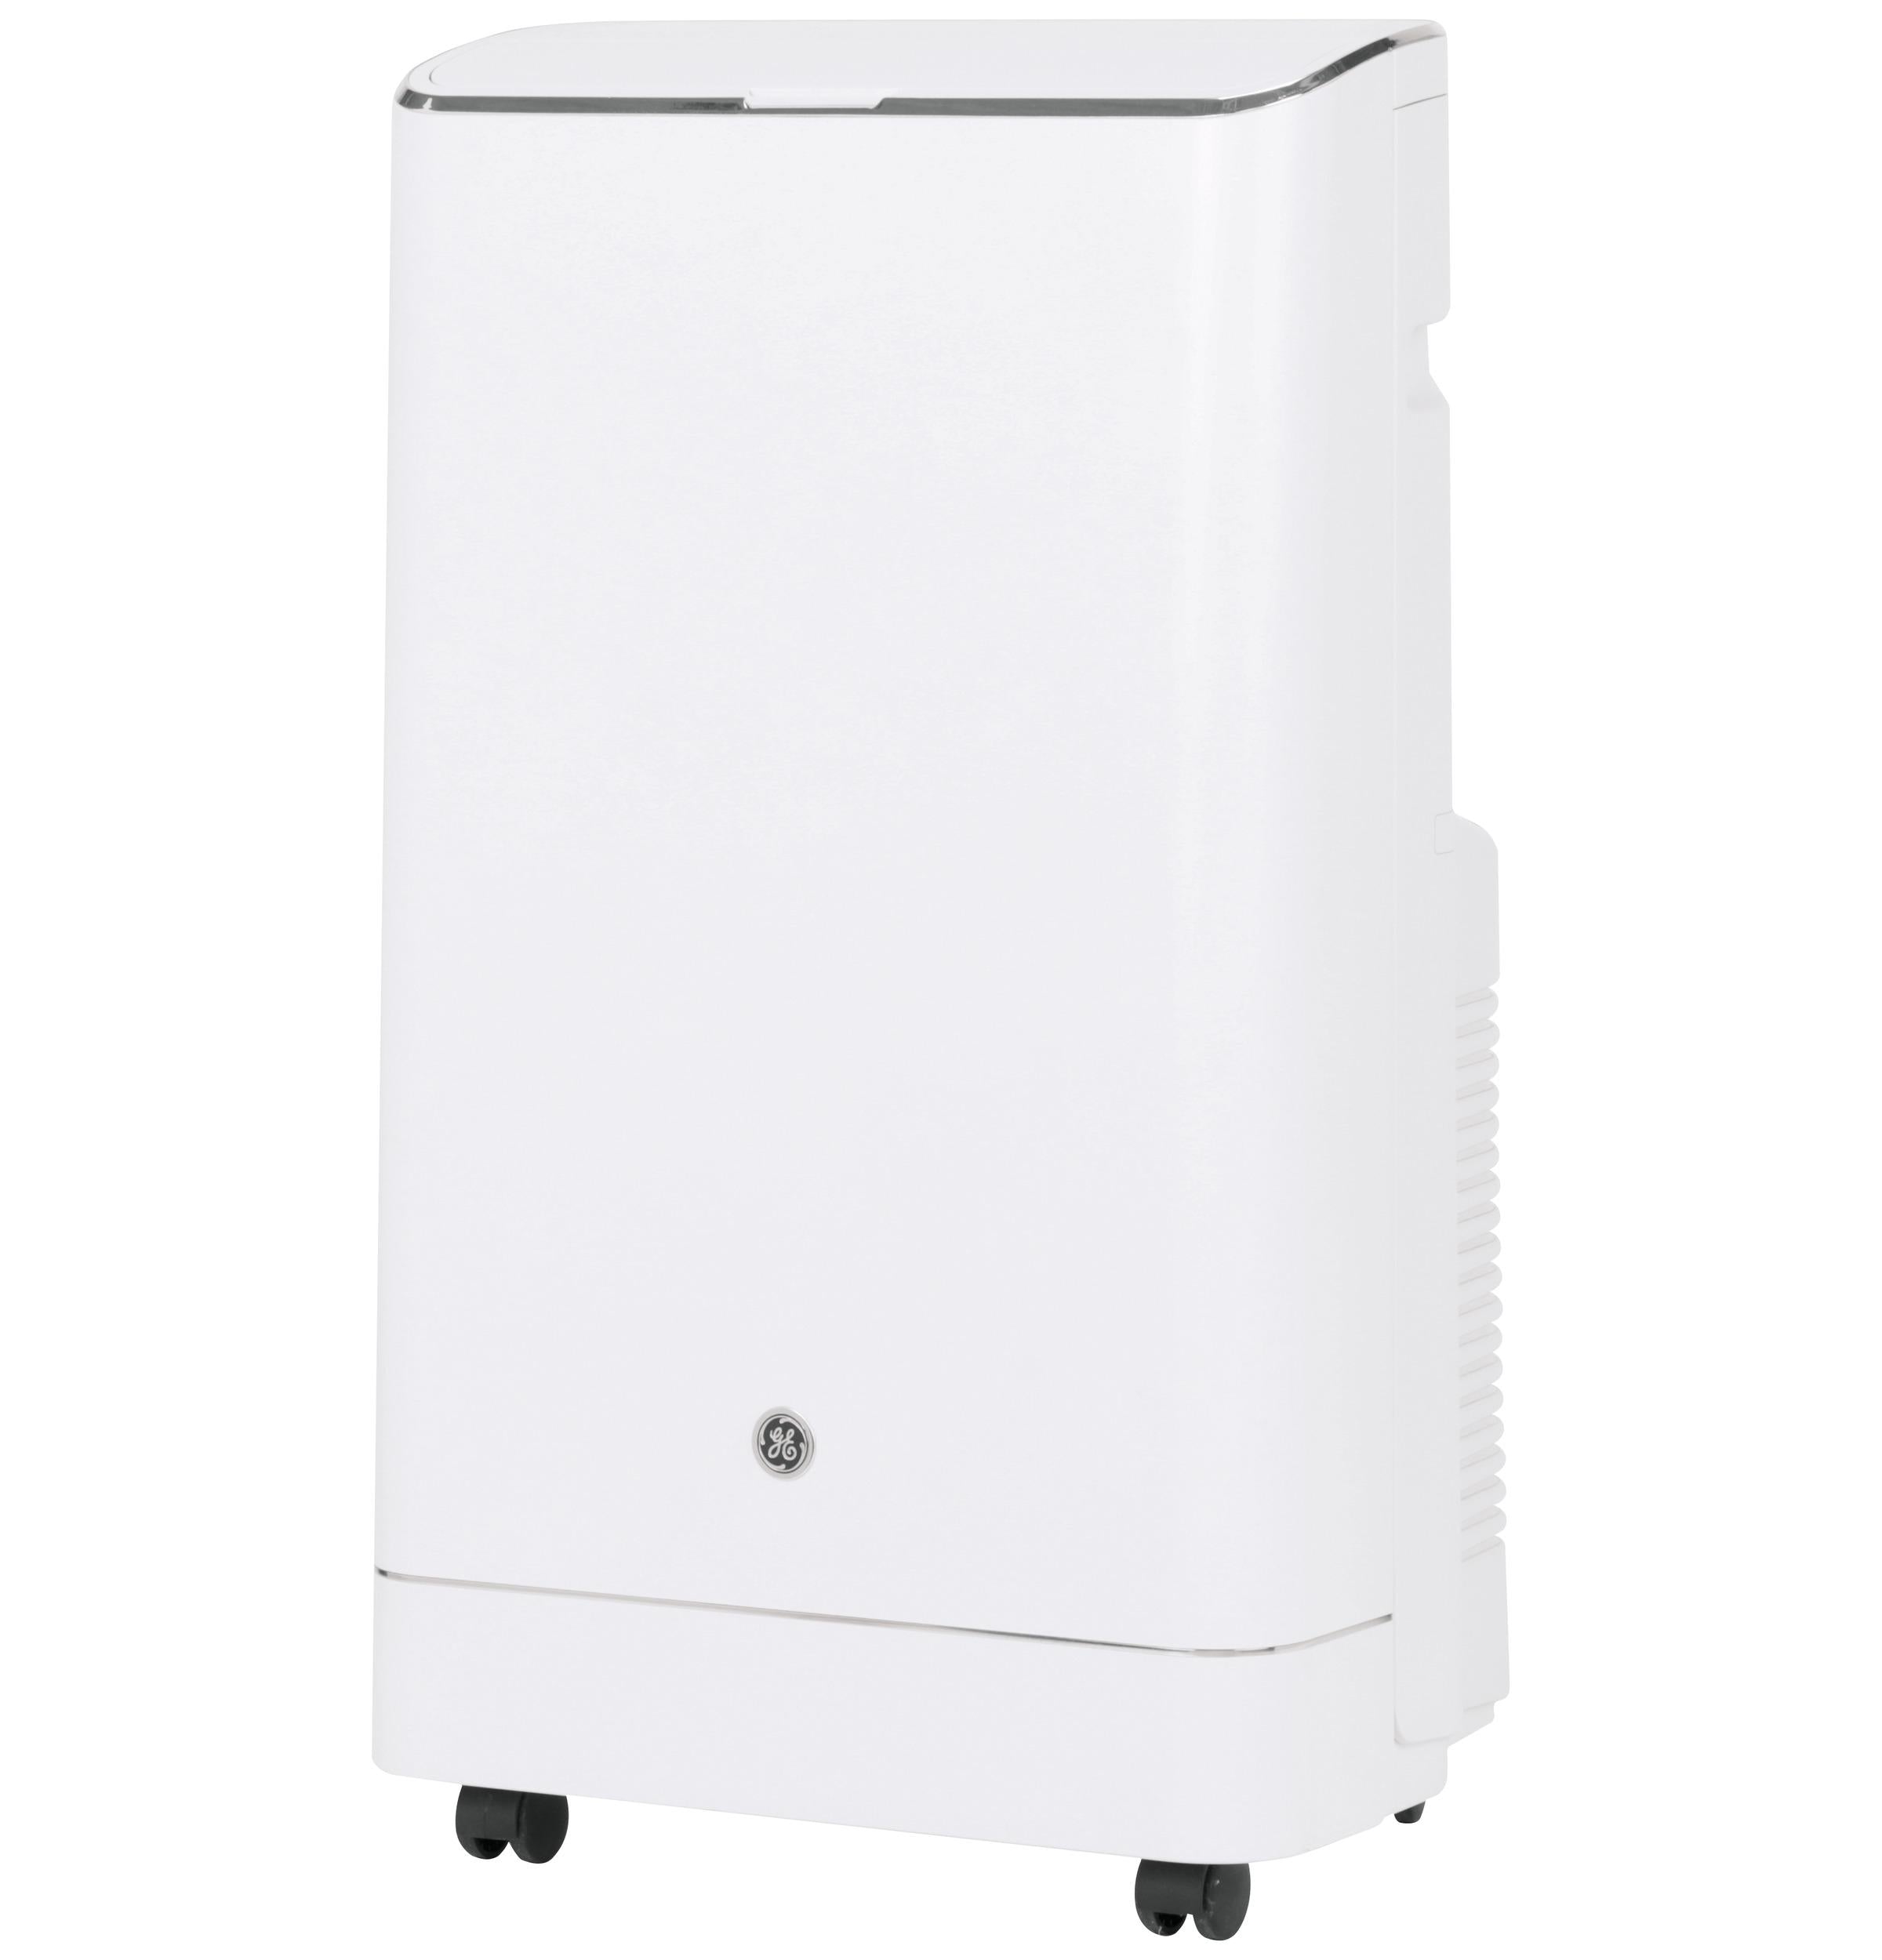 GE® 14,000 BTU Heat/Cool Portable Air Conditioner for Medium Rooms up to 550 sq ft. (9,950 BTU SACC)